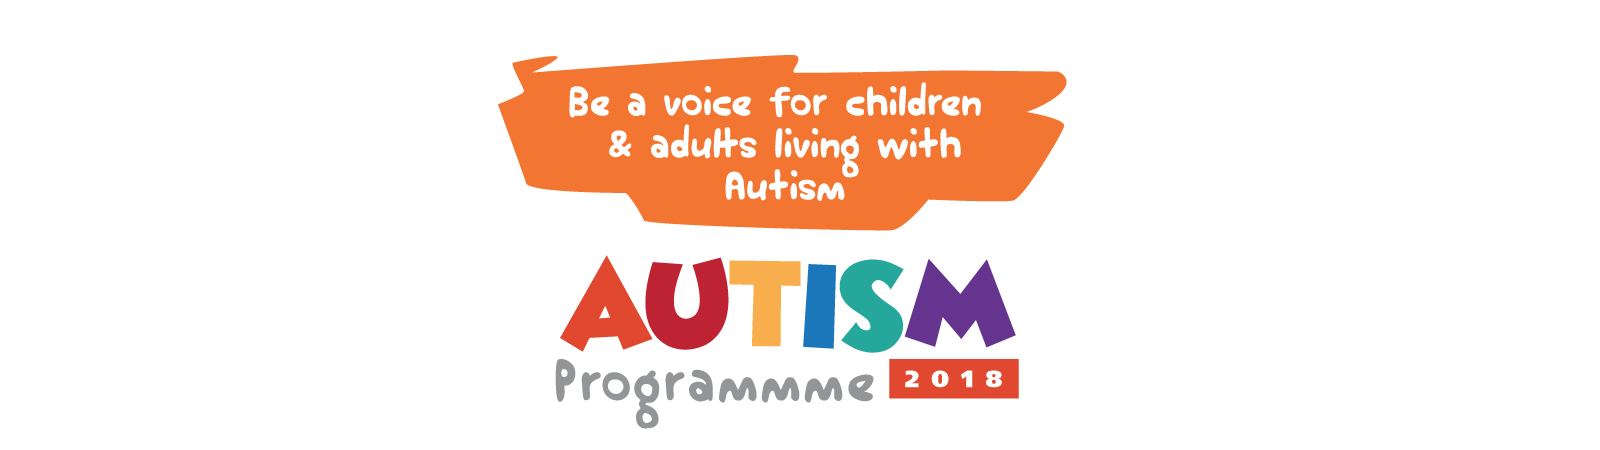 Autism Programme 2018